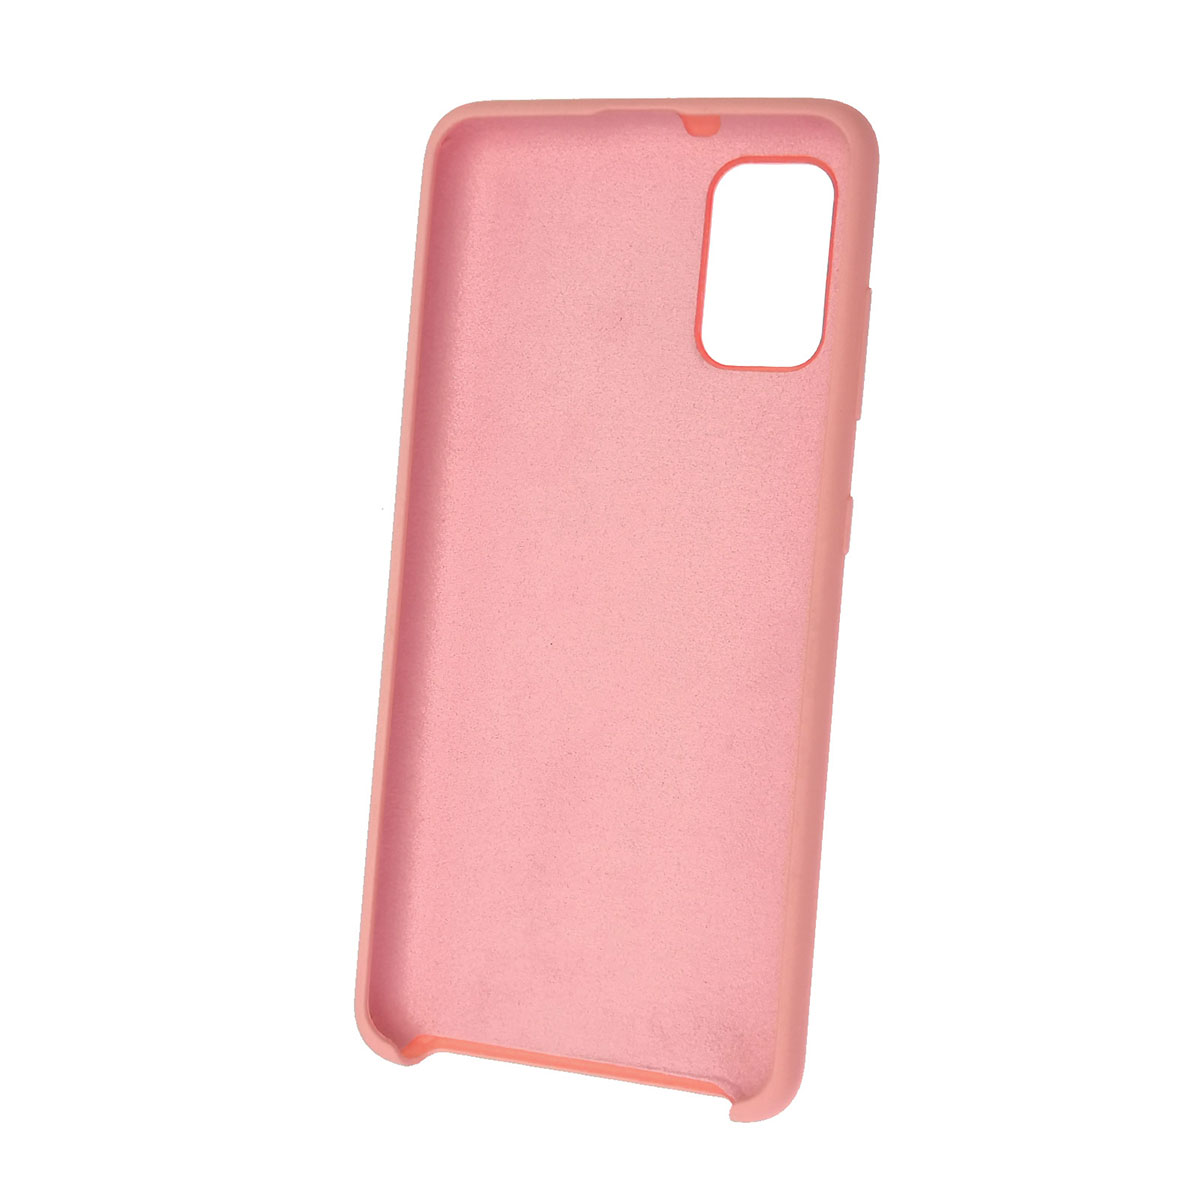 Чехол накладка Silicon Cover для SAMSUNG Galaxy A41 (SM-A415), силикон, бархат, цвет светло розовый.